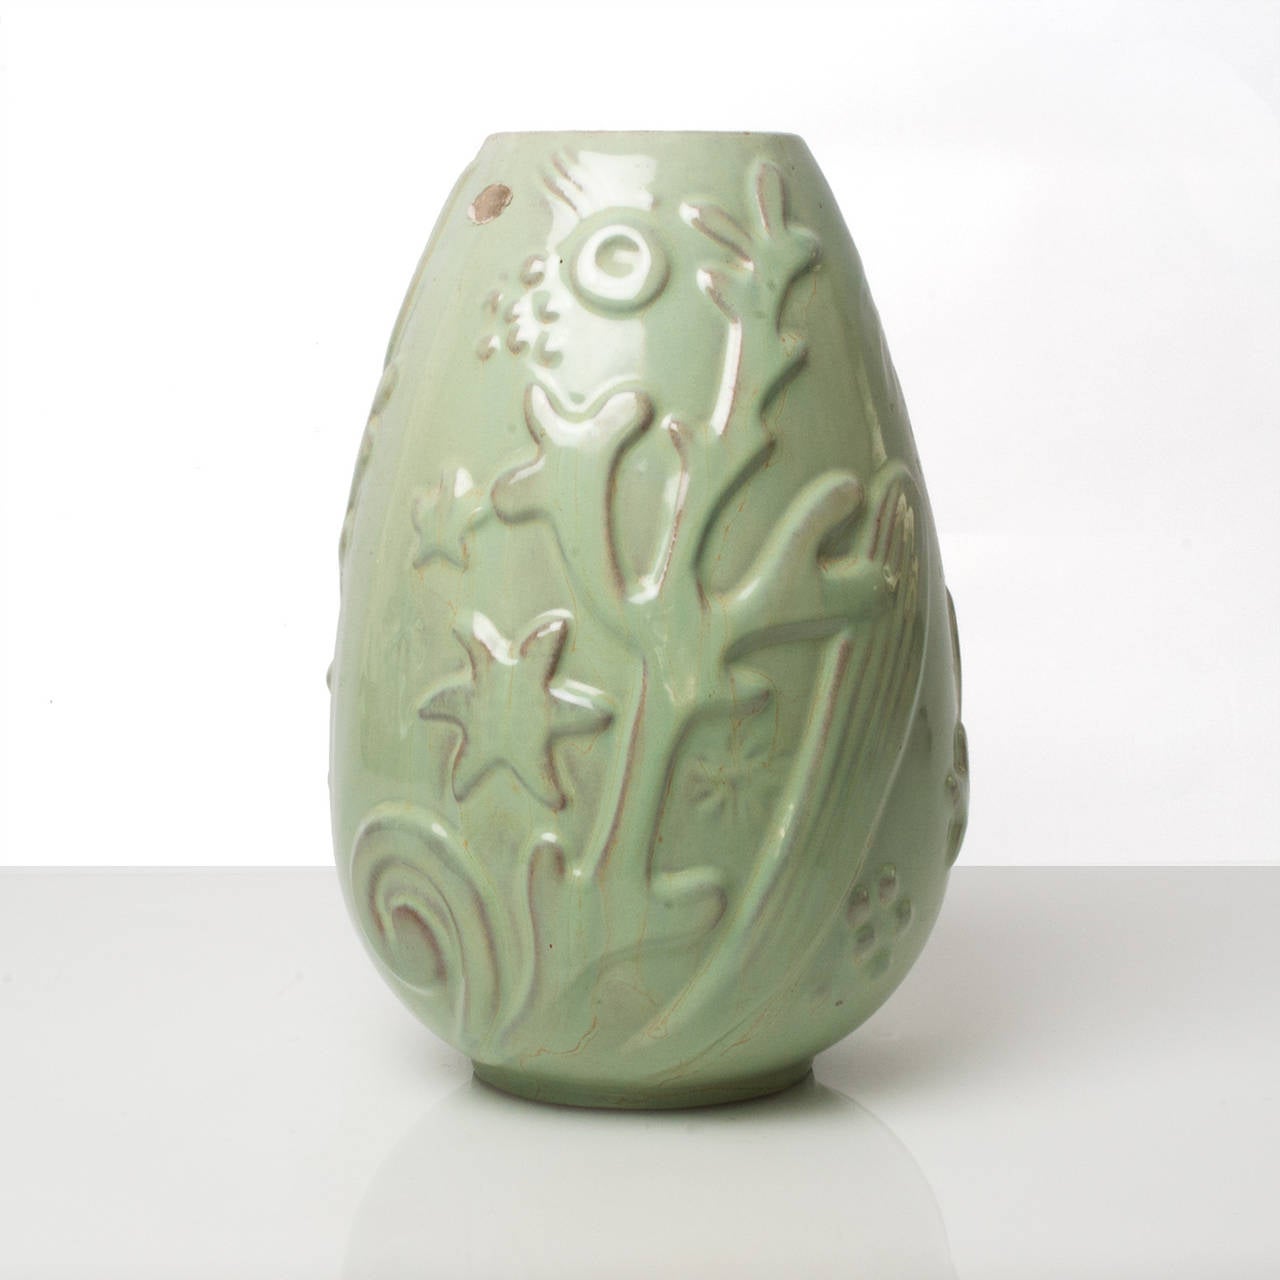 Glazed Swedish Art Deco Ceramic Vase by Anna-Lisa Thomson